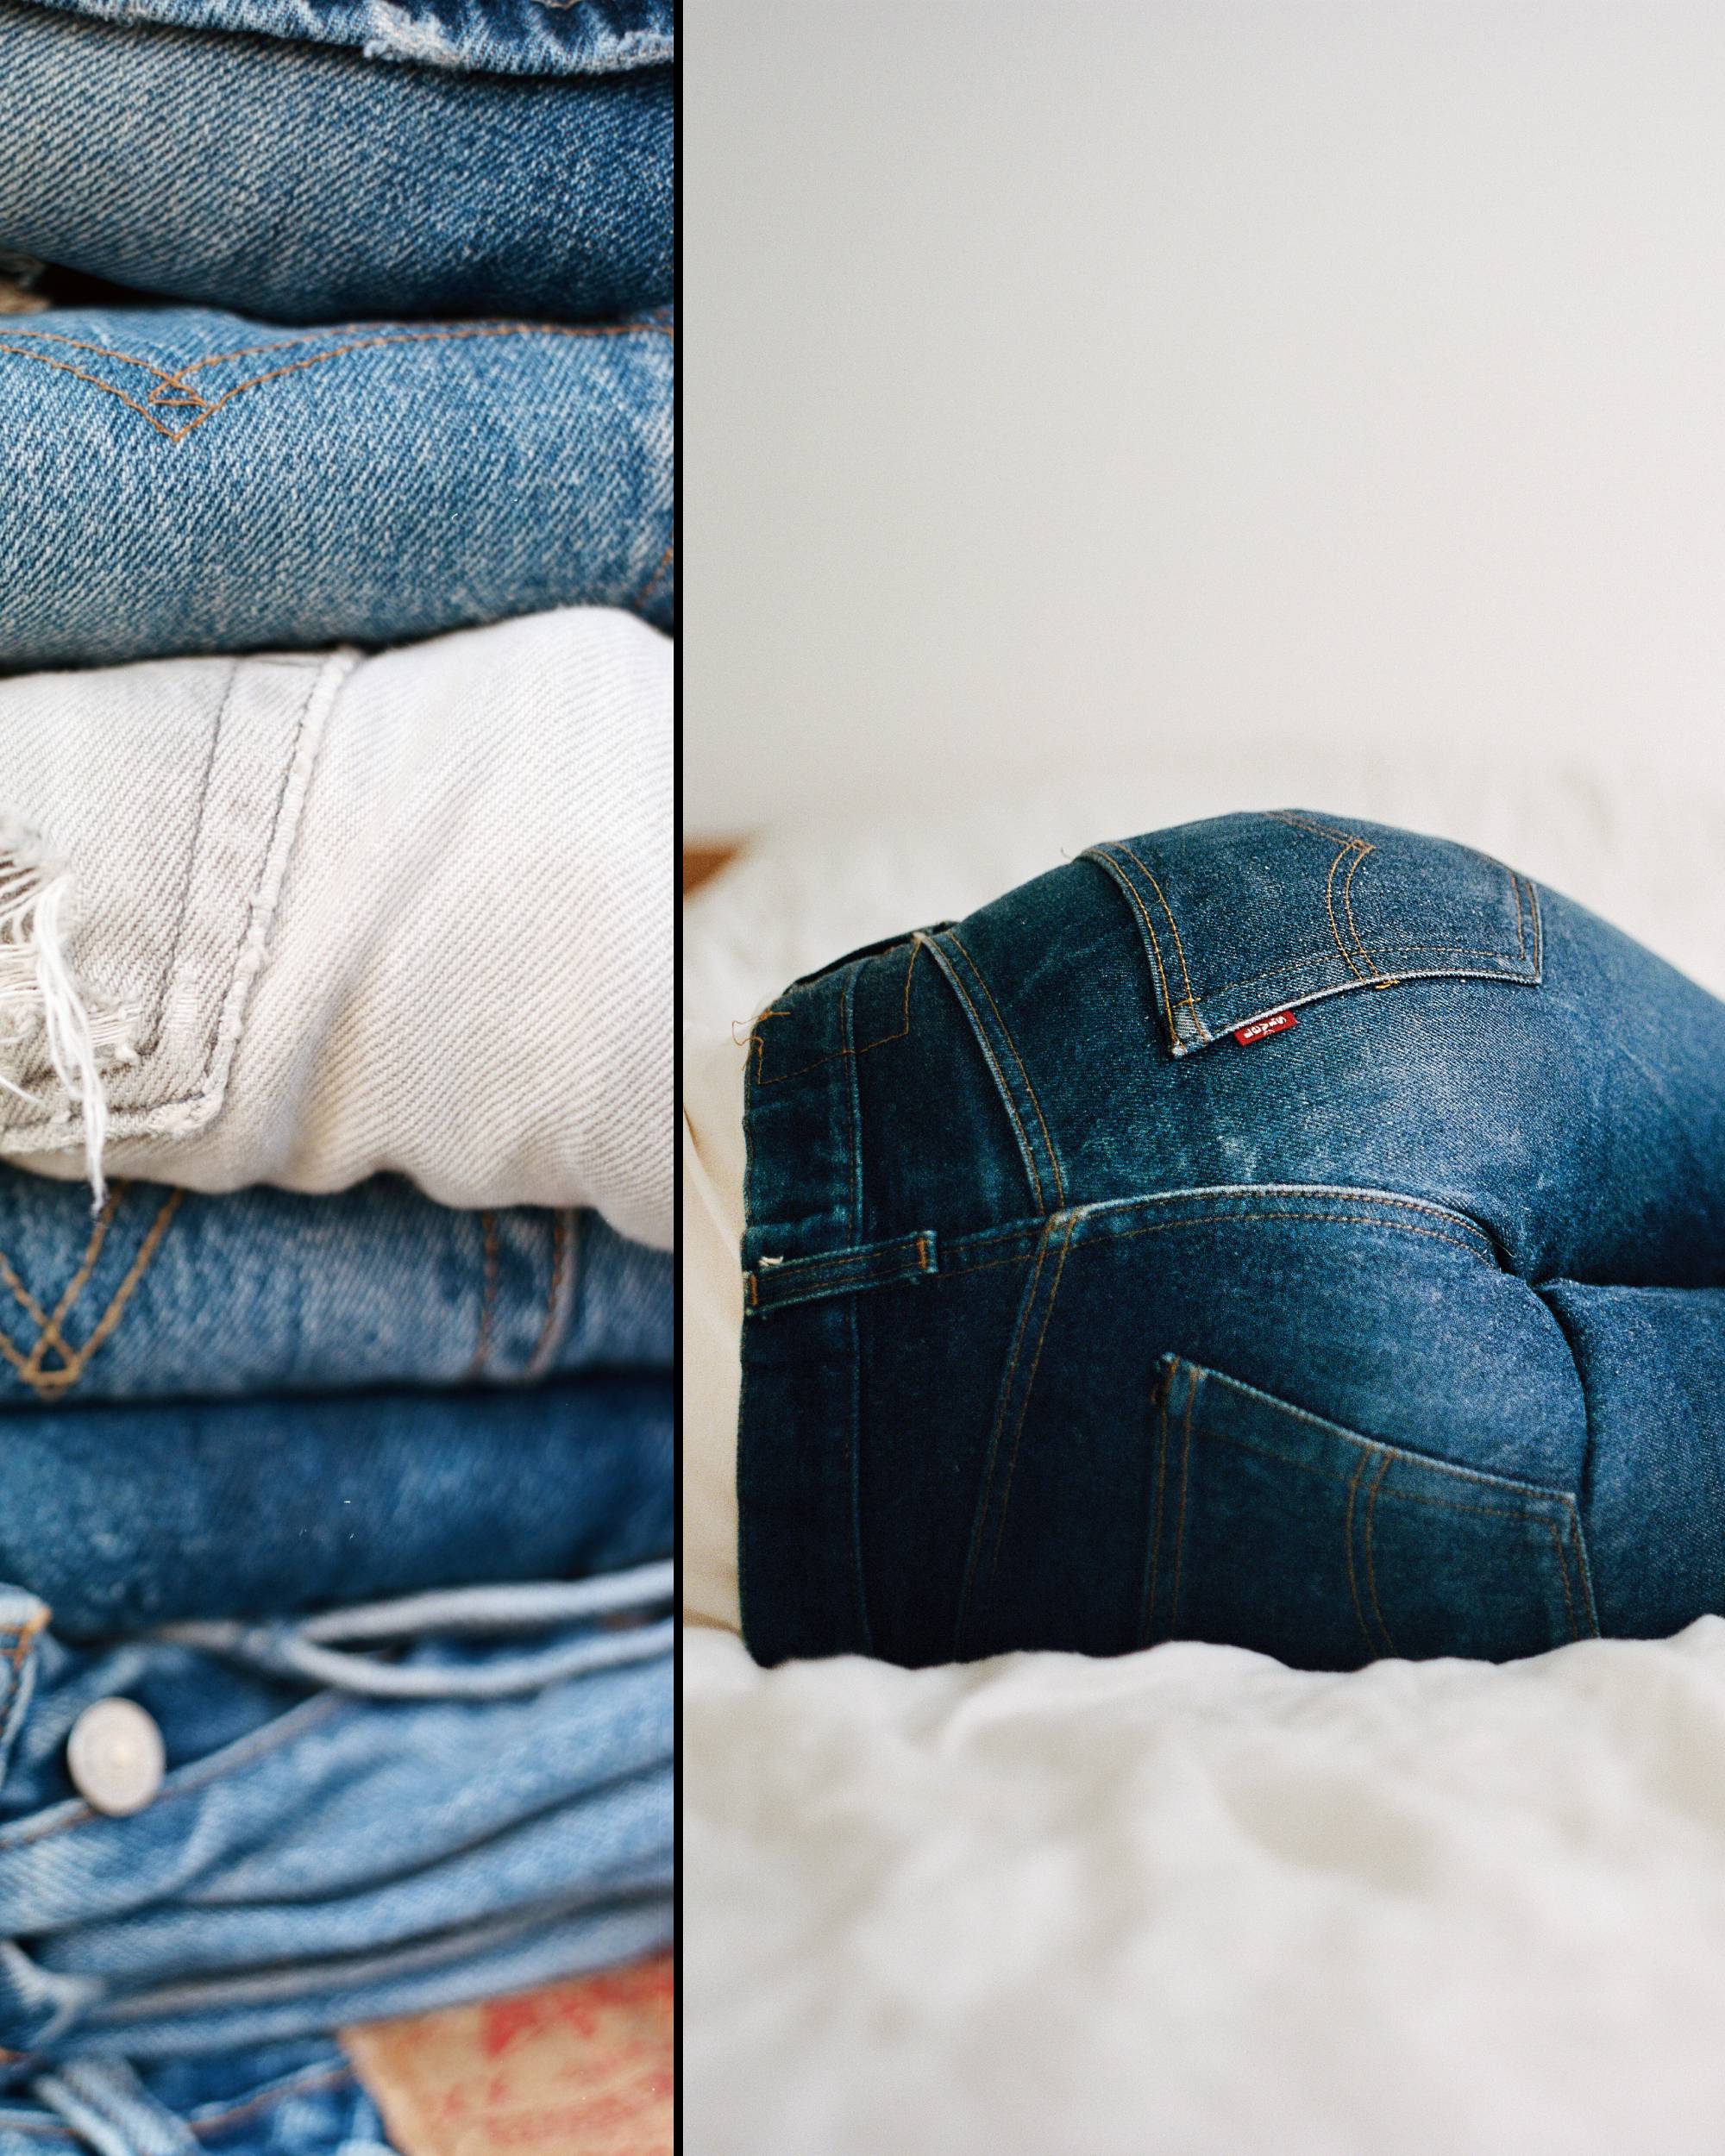 Women's Jeans Fits, Types & Styles